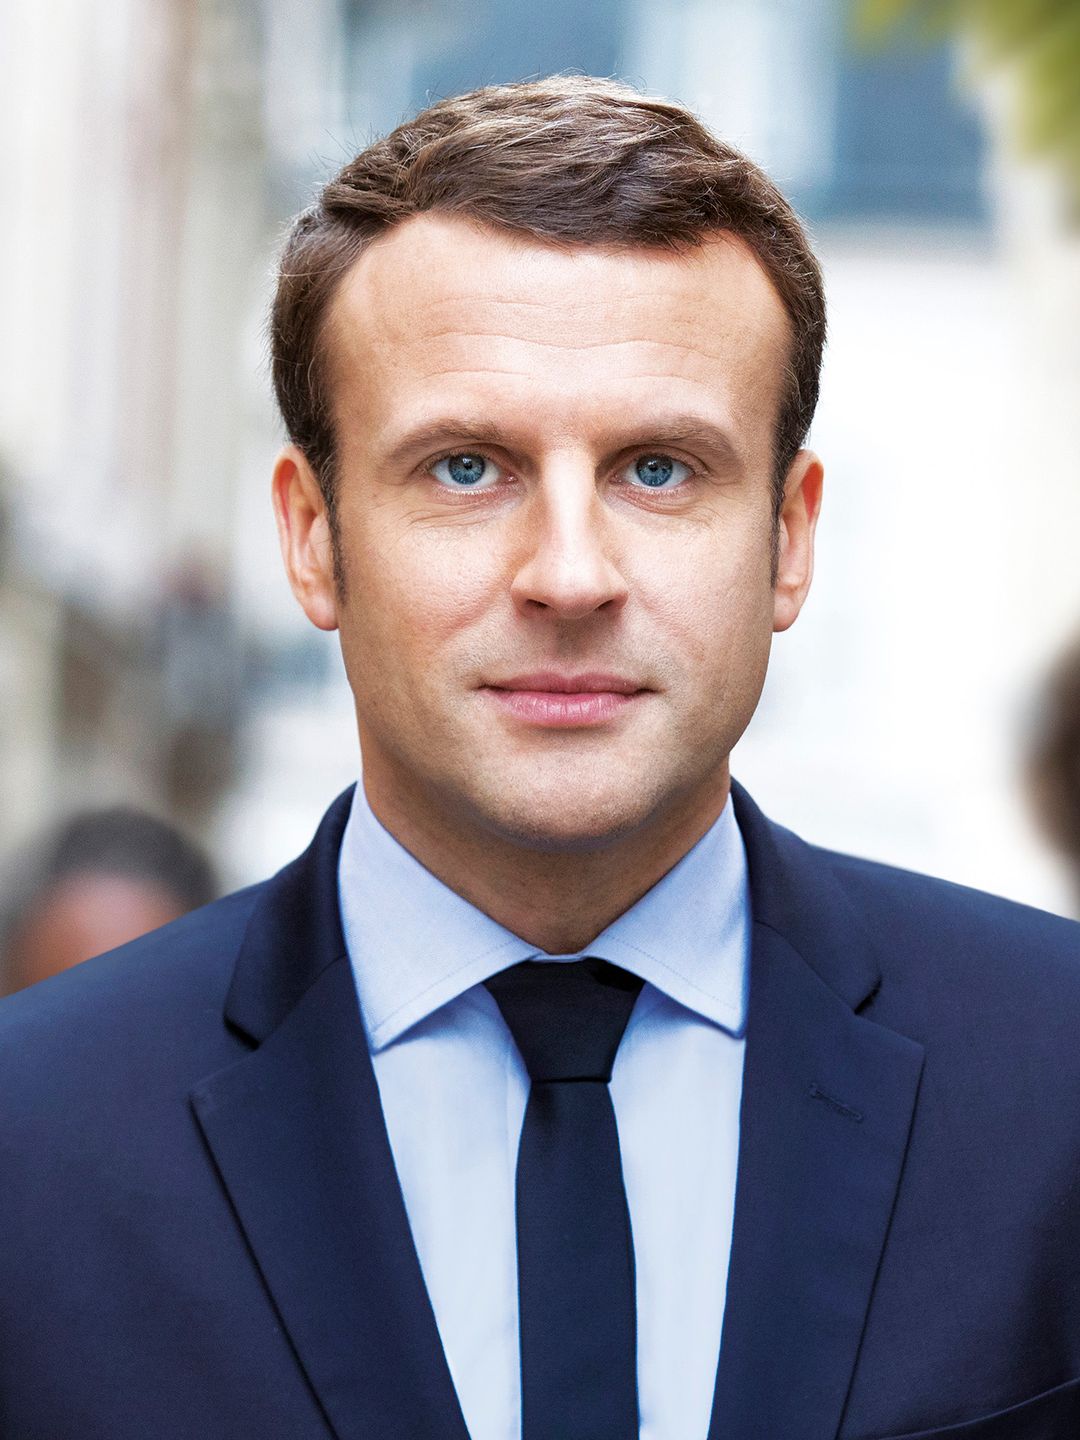 Emmanuel Macron life story